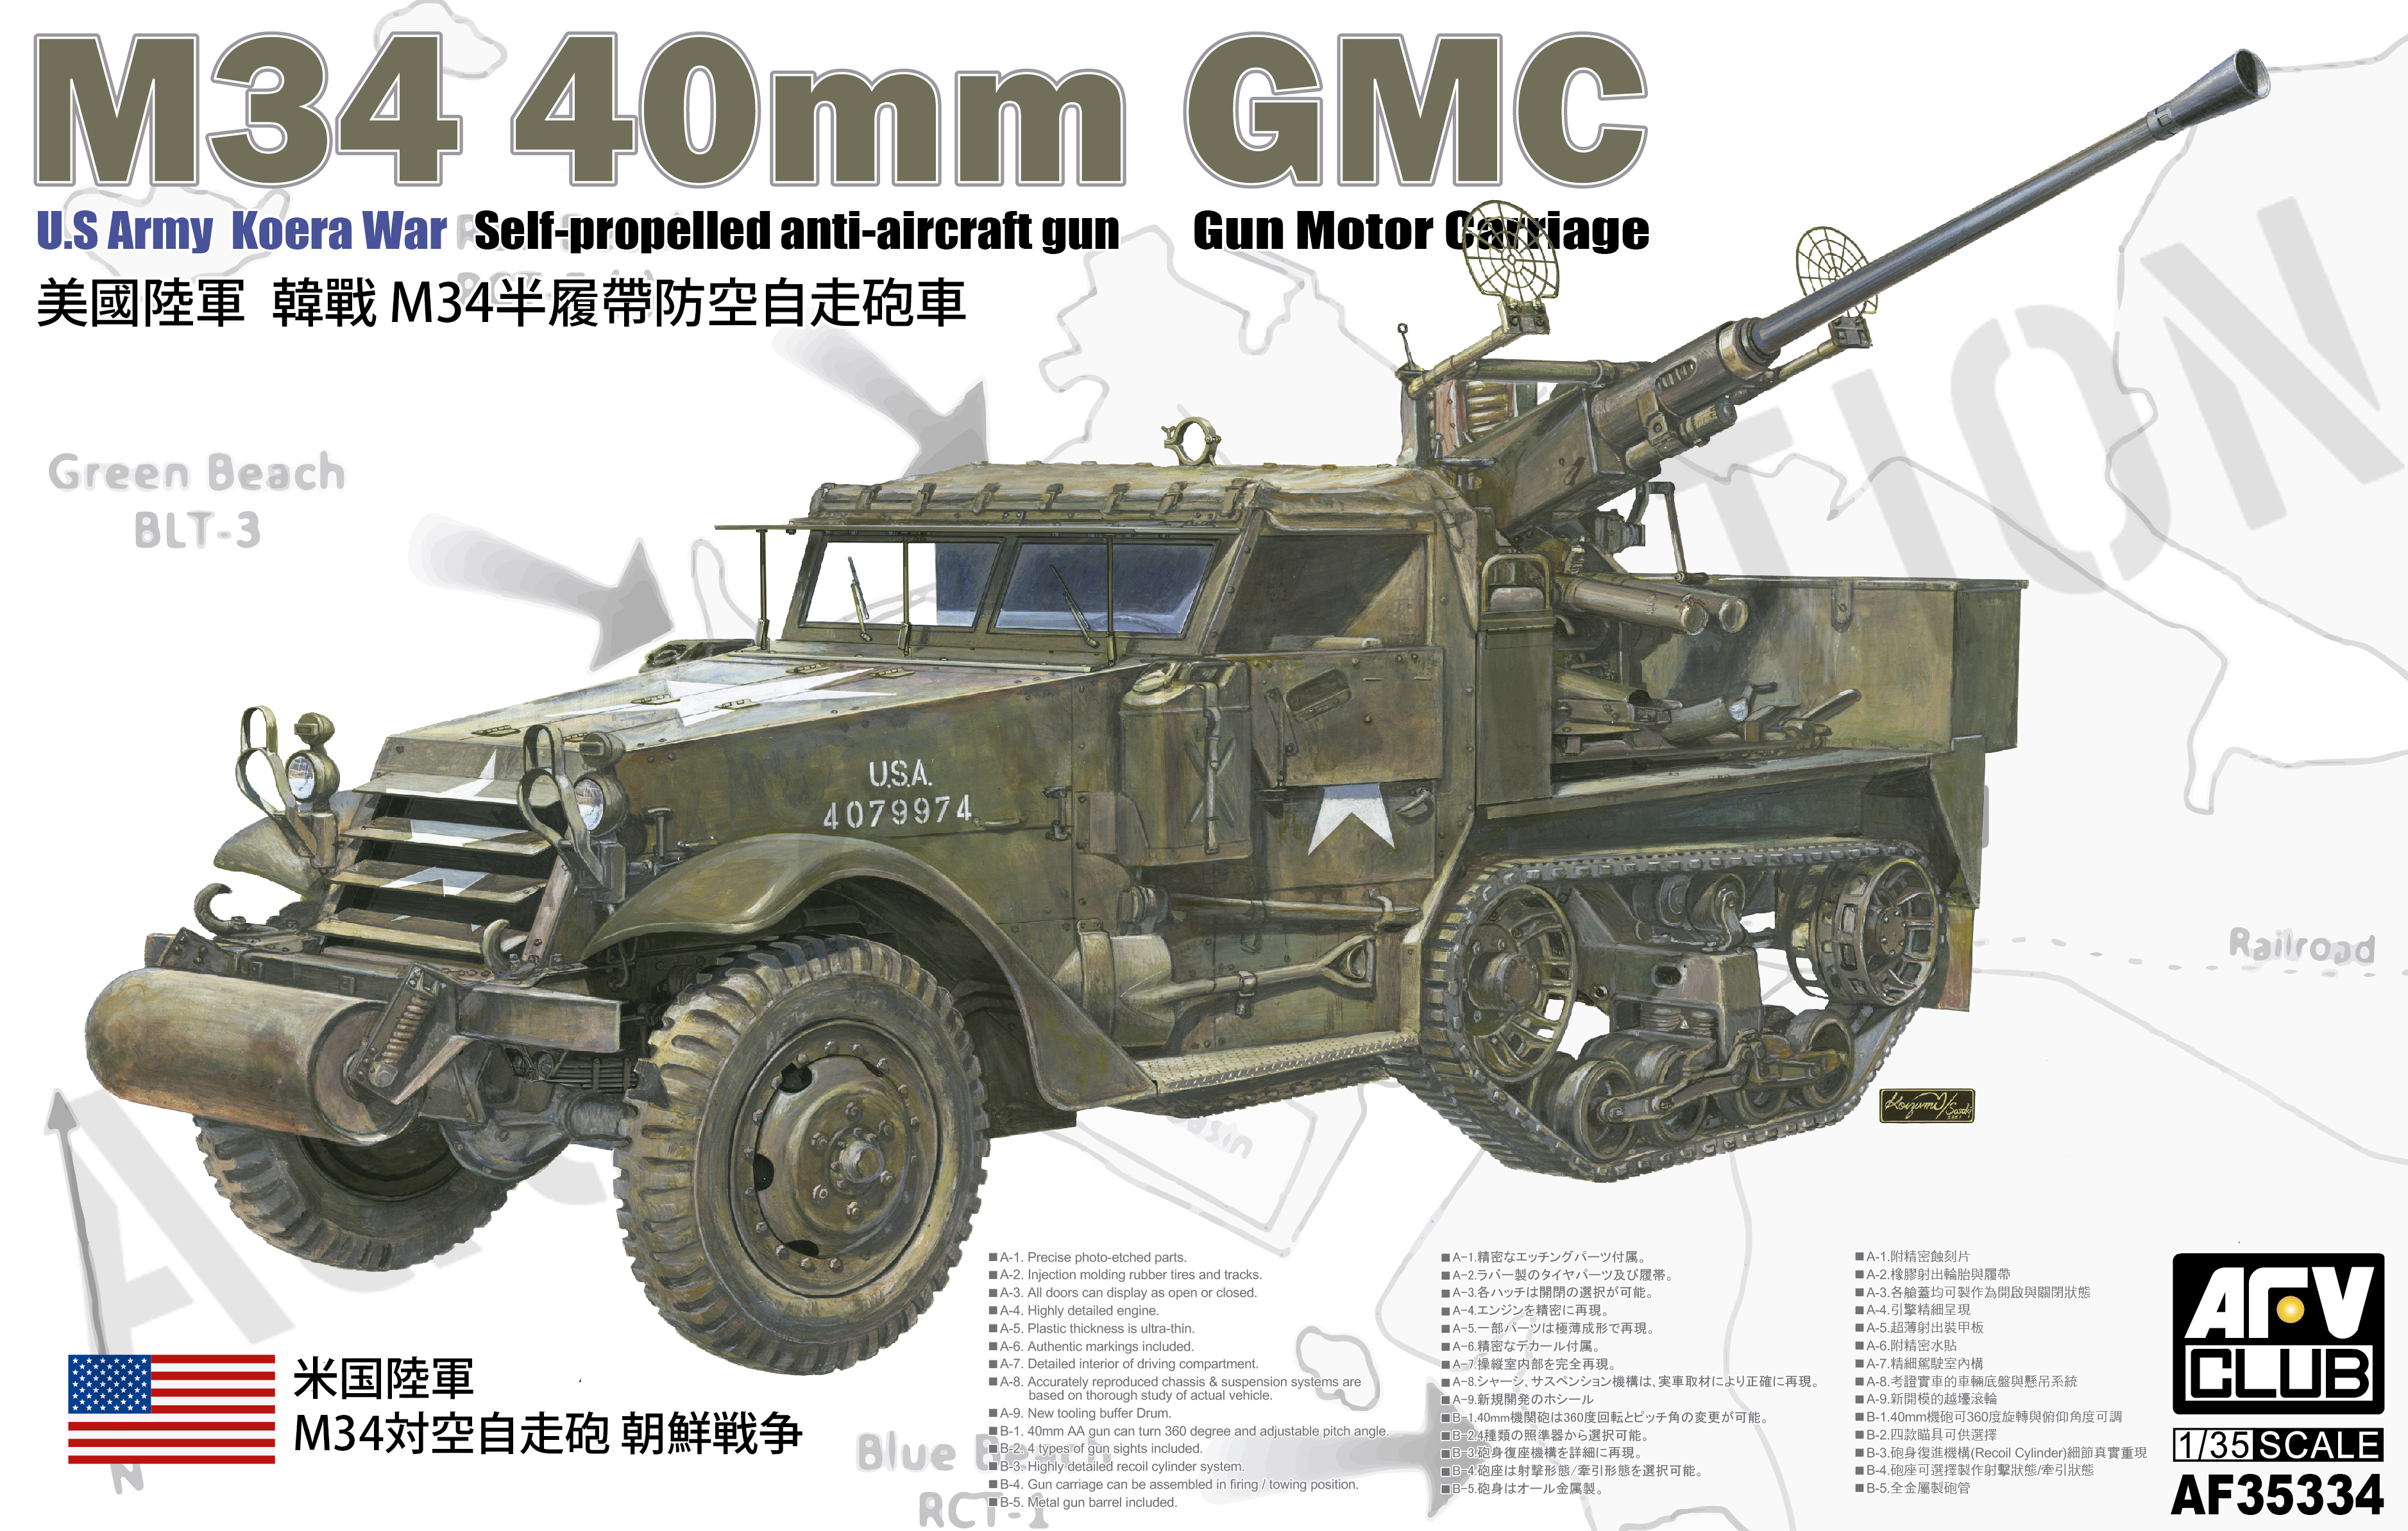 AF35224 M34 GMC A4 with 40mm Bofors Gun